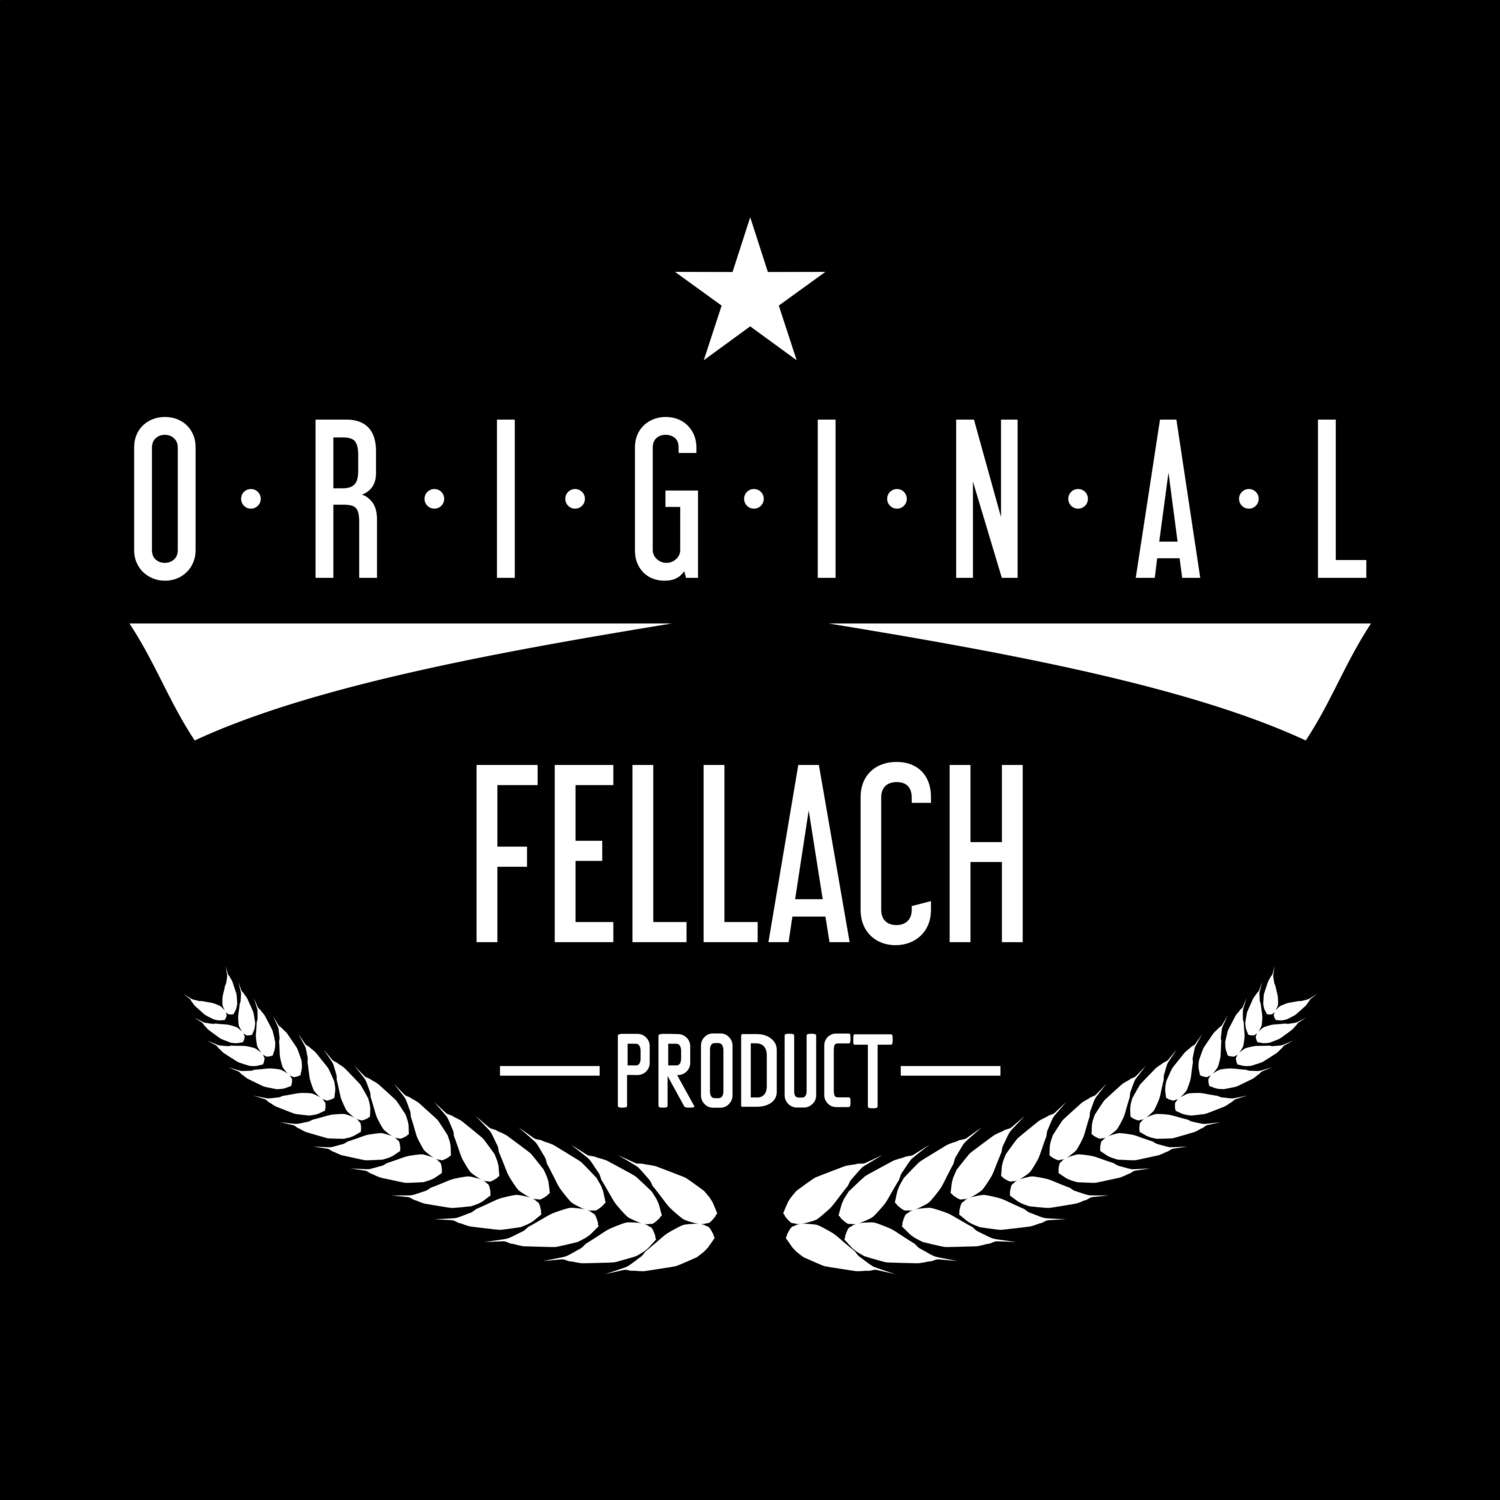 Fellach T-Shirt »Original Product«